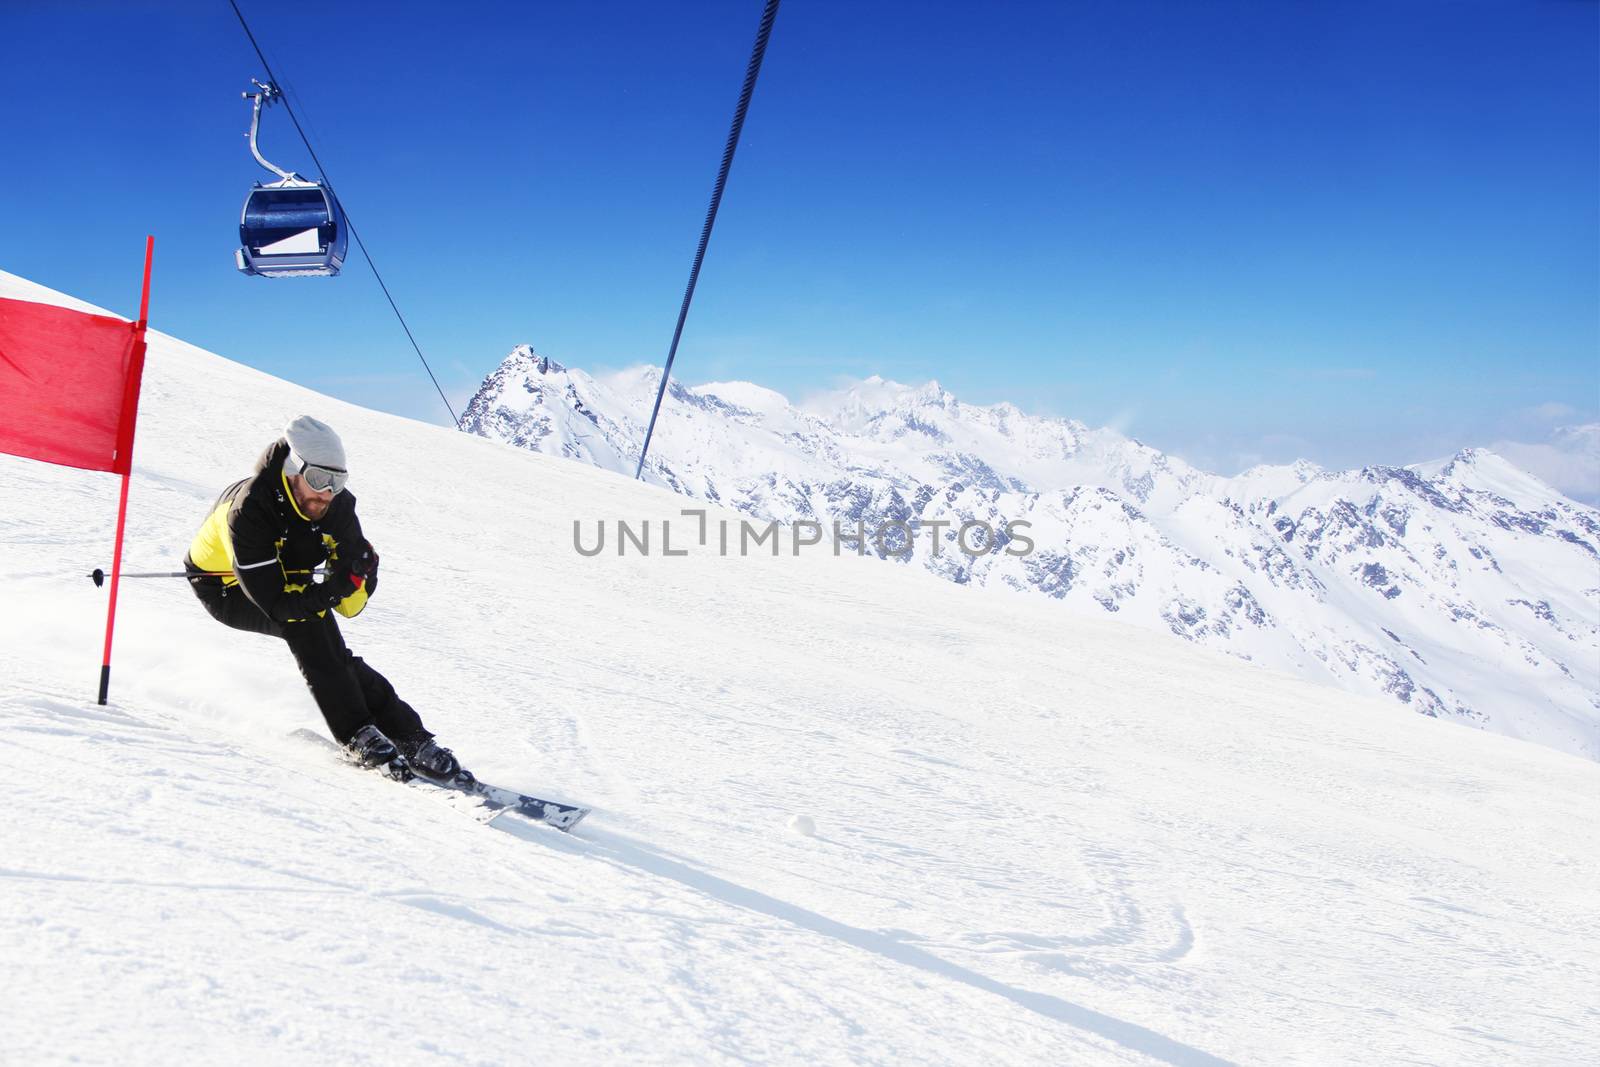 Giant Slalom ski racer by destillat